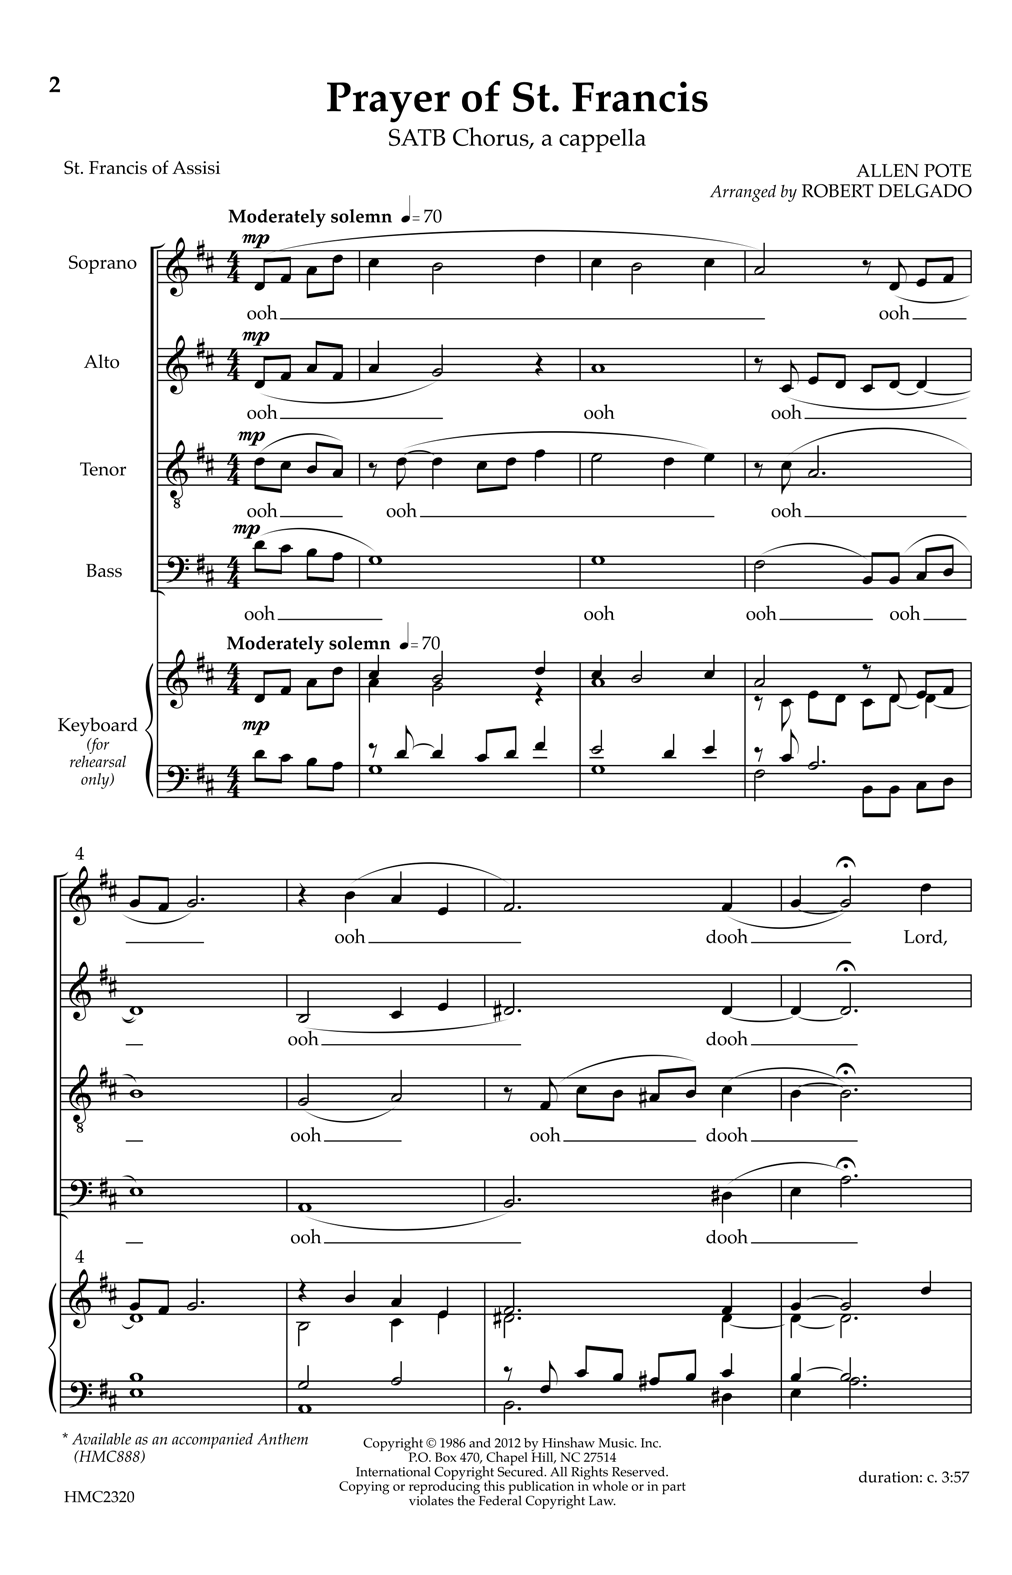 Allen Pote Prayer Of St. Francis (arr. Robert Delgado) Sheet Music Notes & Chords for SATB Choir - Download or Print PDF